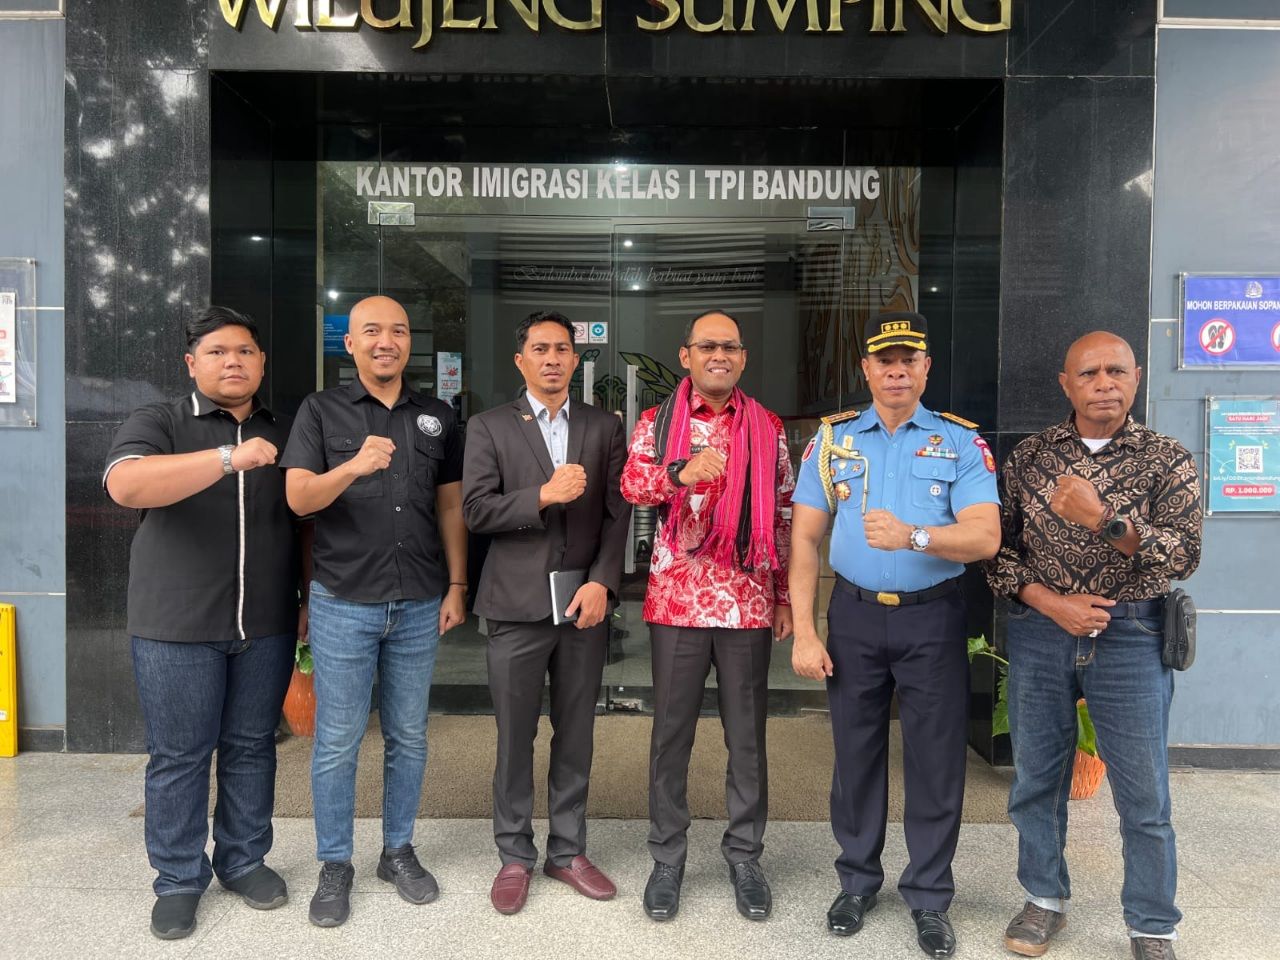 Kantor Imigrasi Bandung-Kedubes Timor Leste untuk Indonesia Kordinasi Bahas Pendeportasian./IST